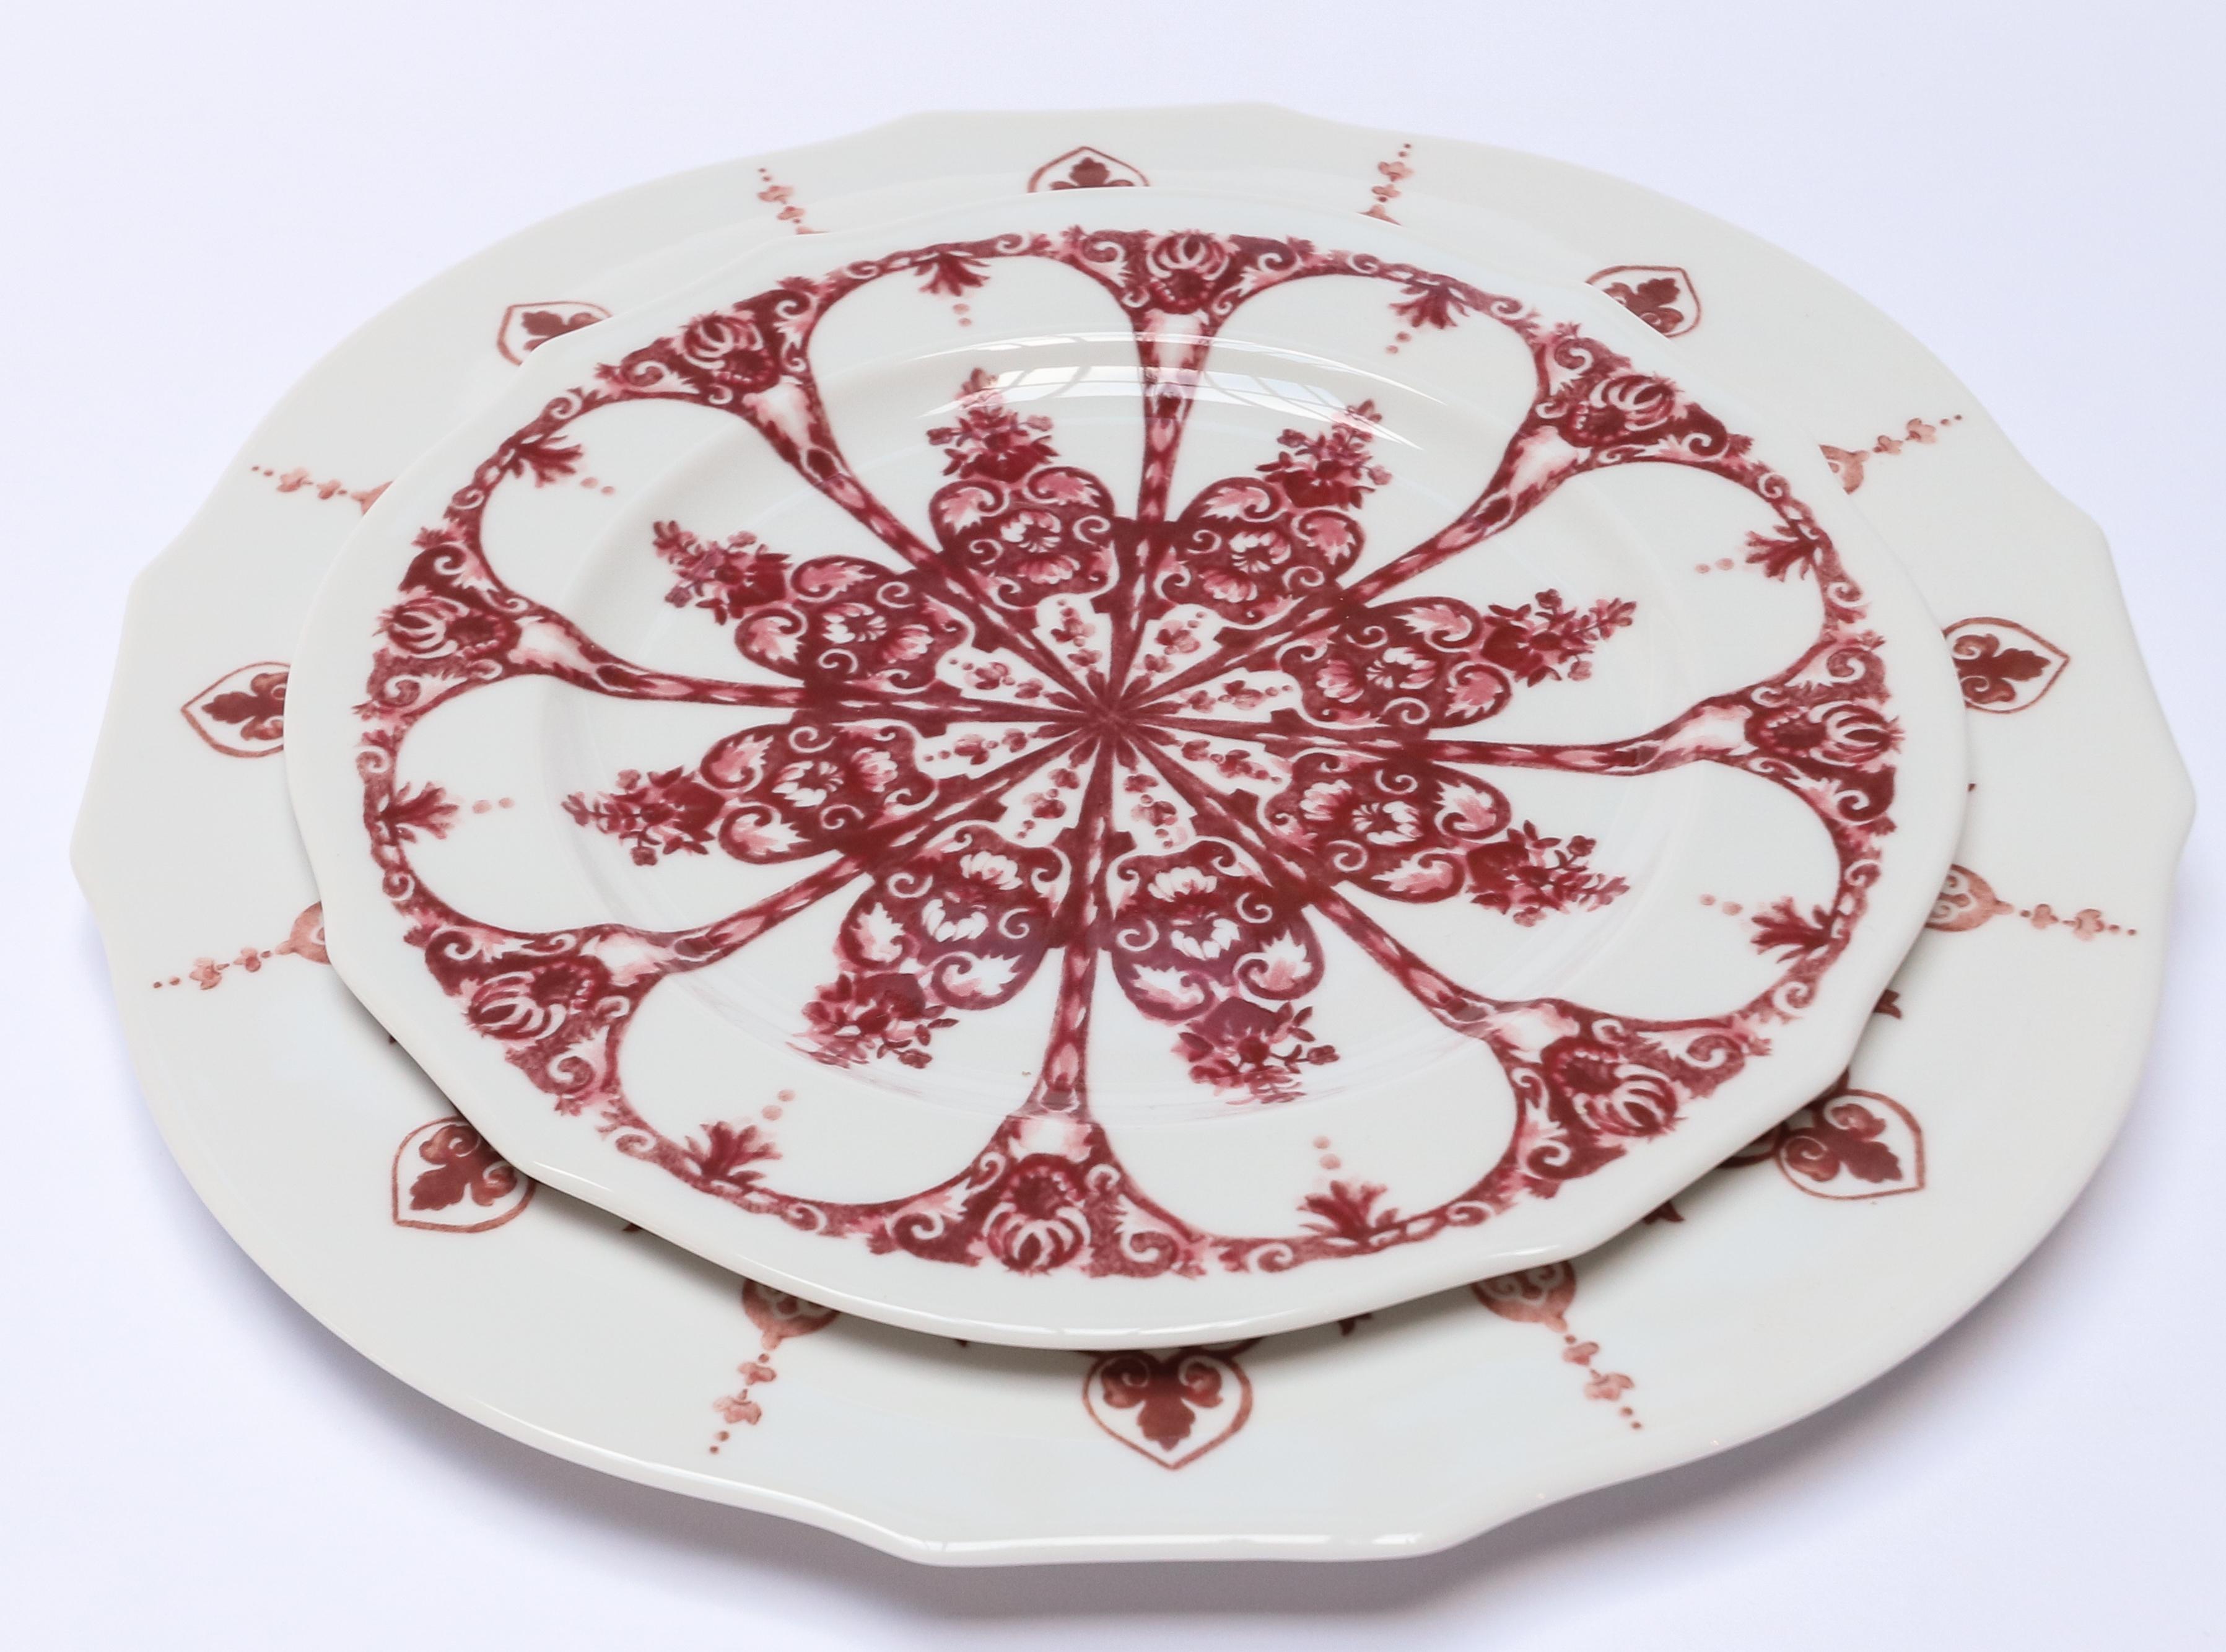 Contemporary Richard Ginori Babele Rosso Red Dessert Plate